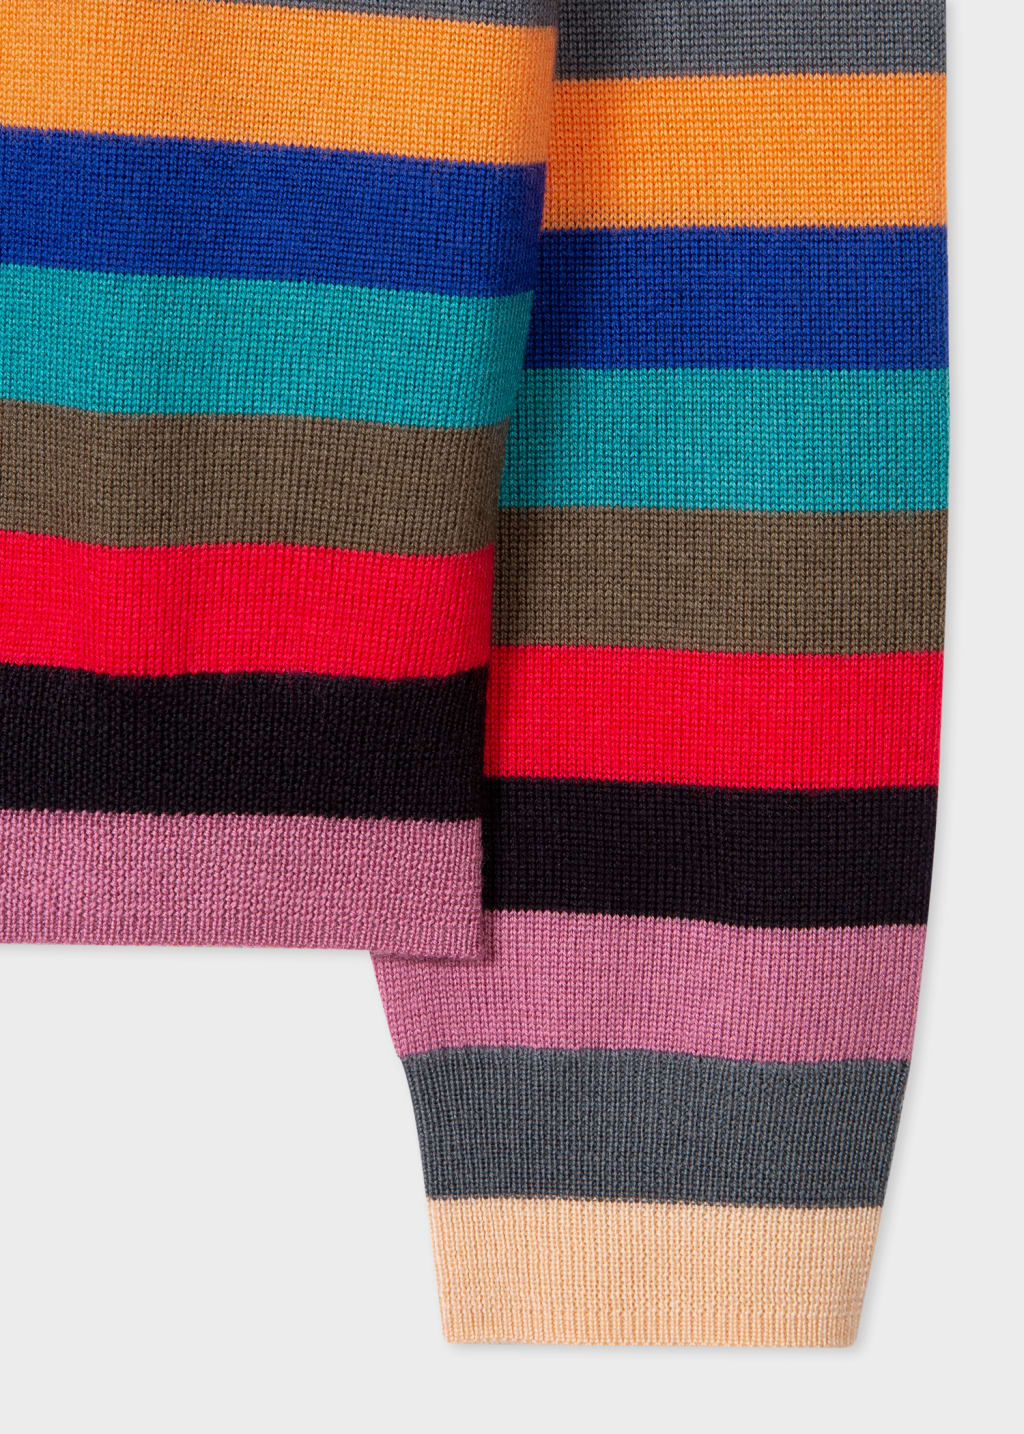 Detail View - Women's 'Swirl' Stripe Merino Wool Sweater Paul Smith